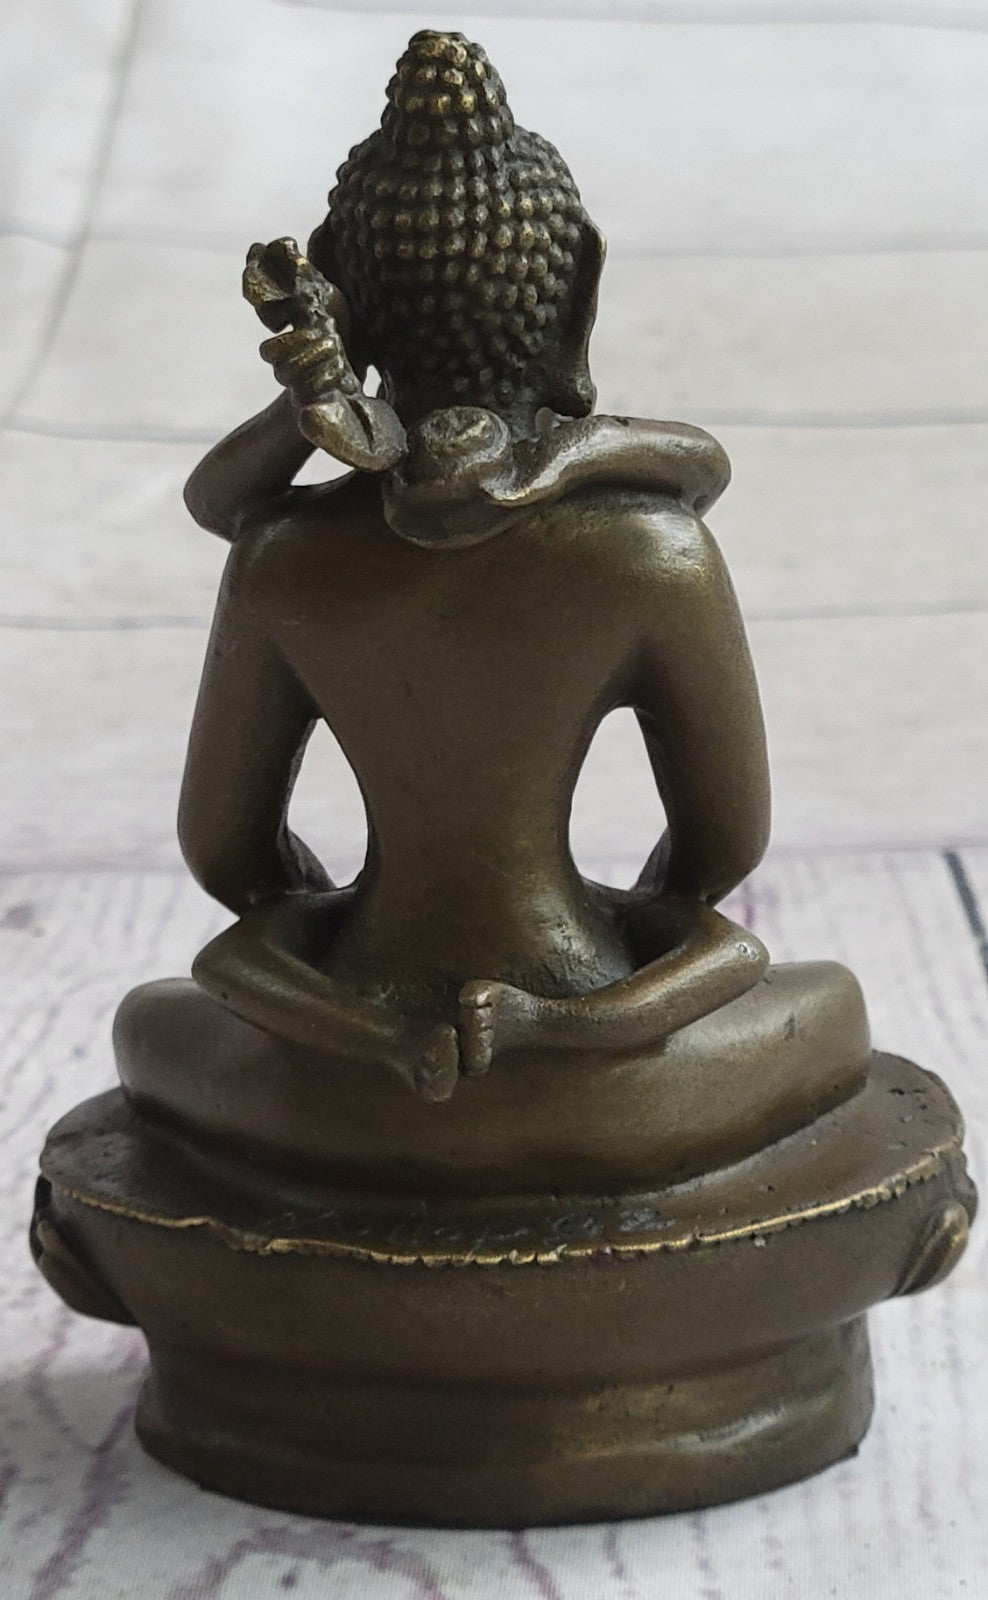 Hevajra Mandkesvara Nude Budda Yab-Yum Statue Rare Vintage Artwork